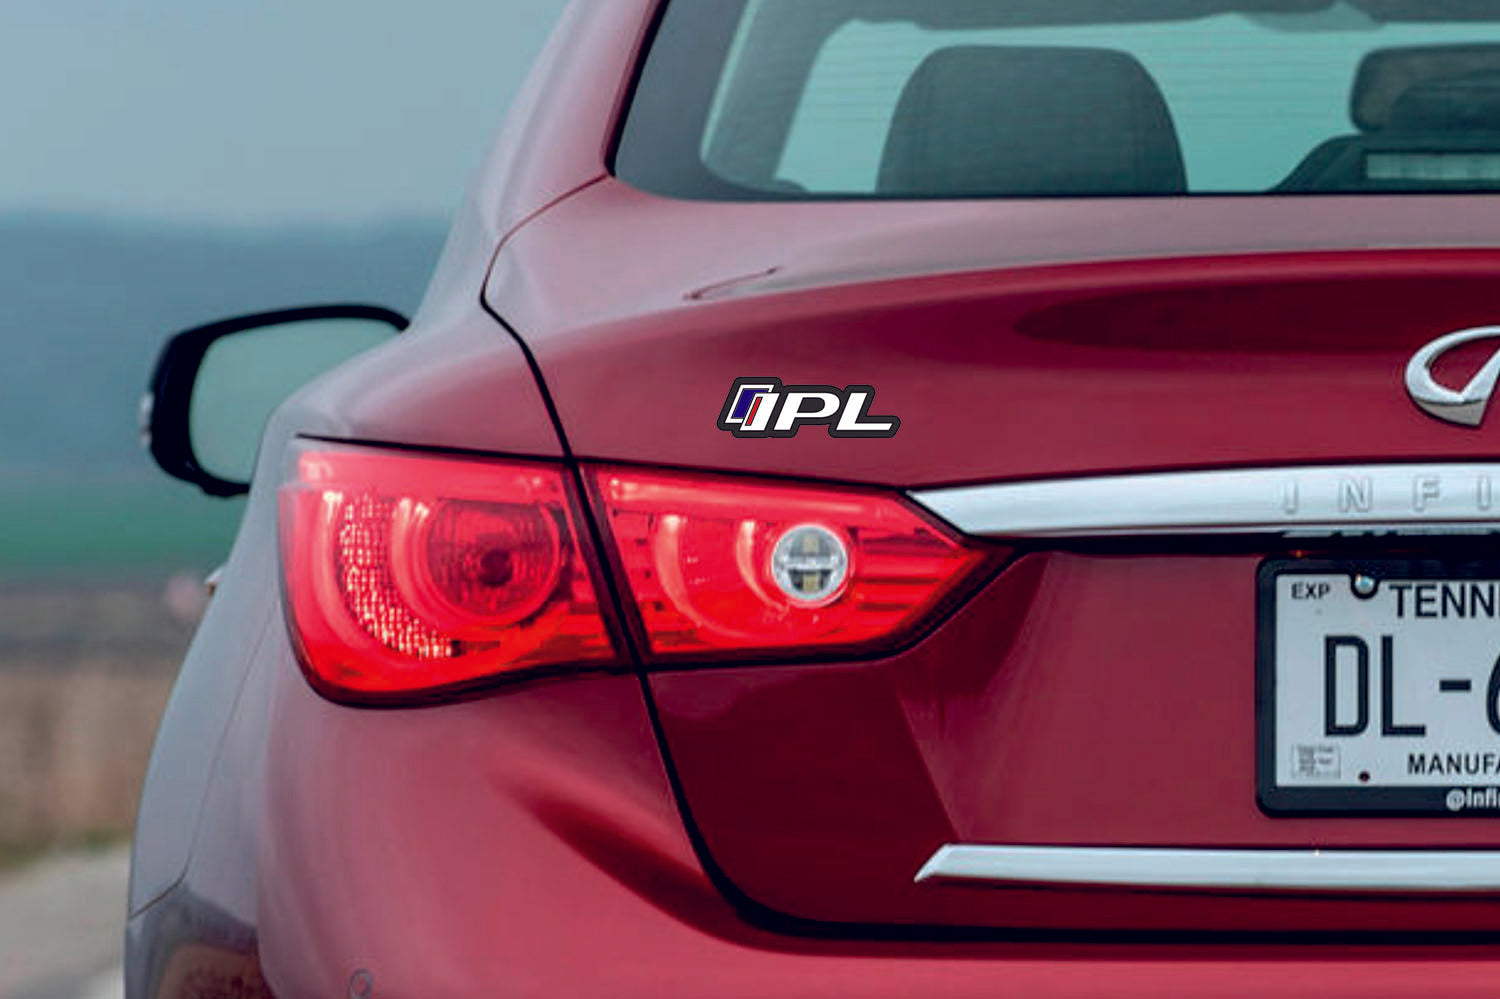 Infiniti tailgate trunk rear emblem with IPL logo